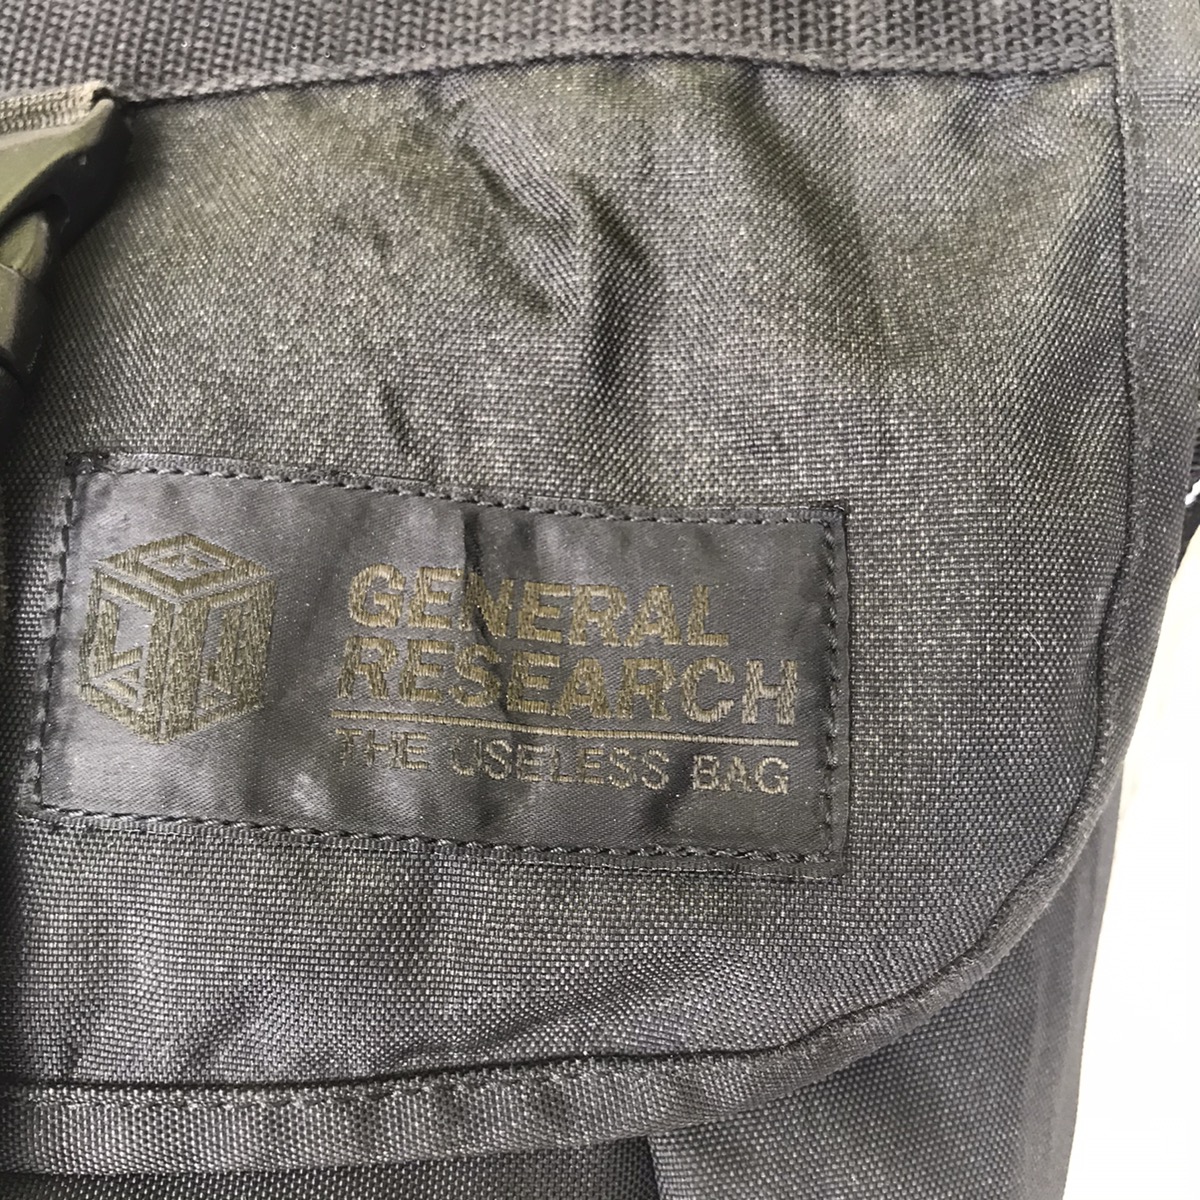 General Research 1999 Messenger Bag - 4